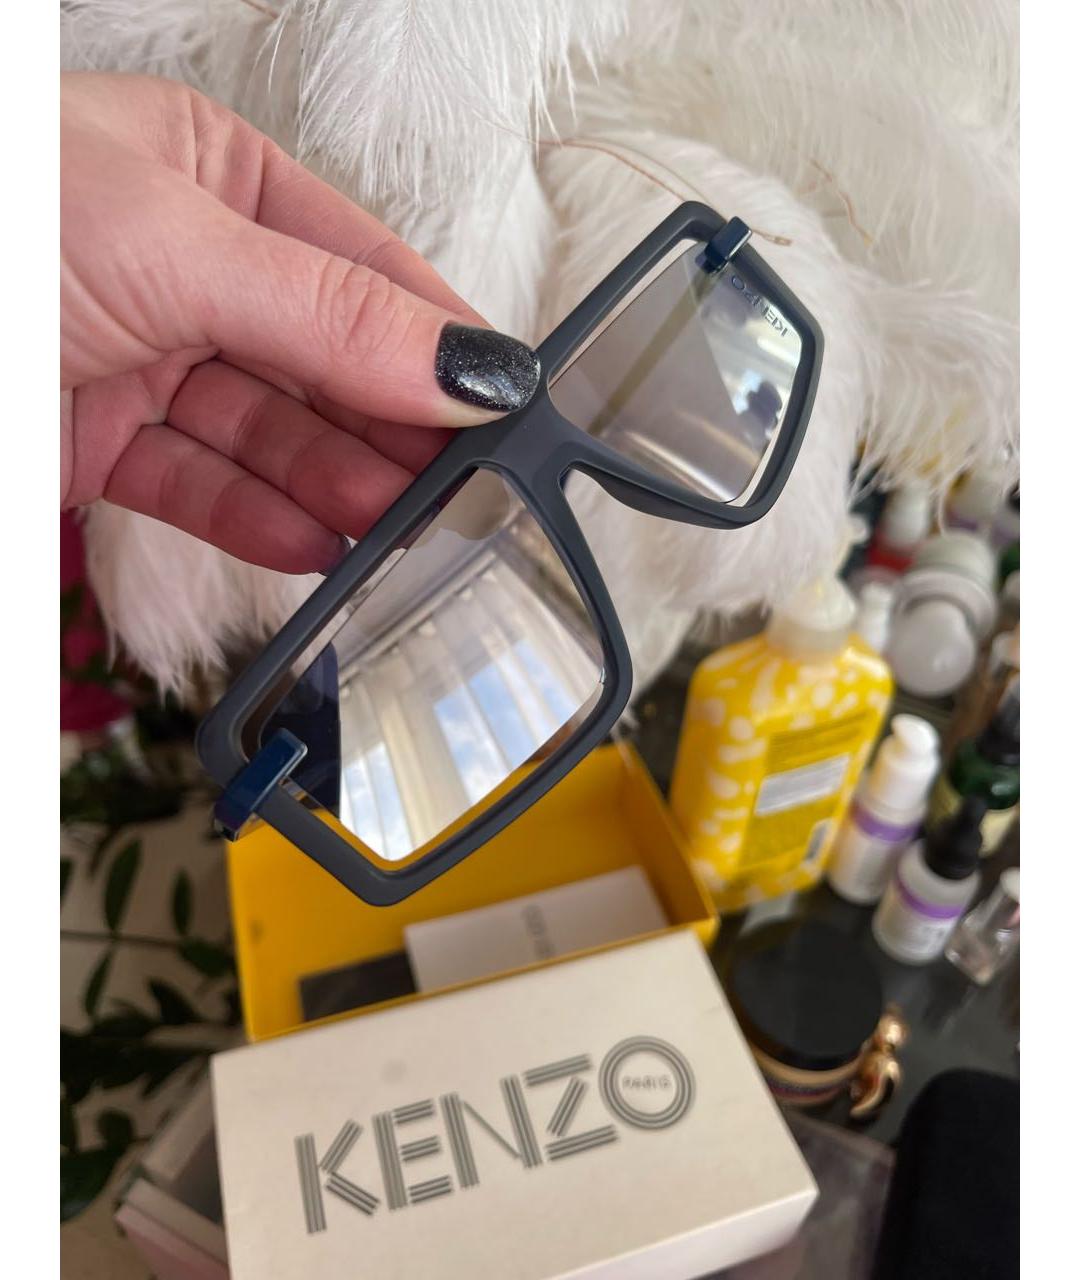 KENZO Темно-синие пластиковые солнцезащитные очки, фото 2